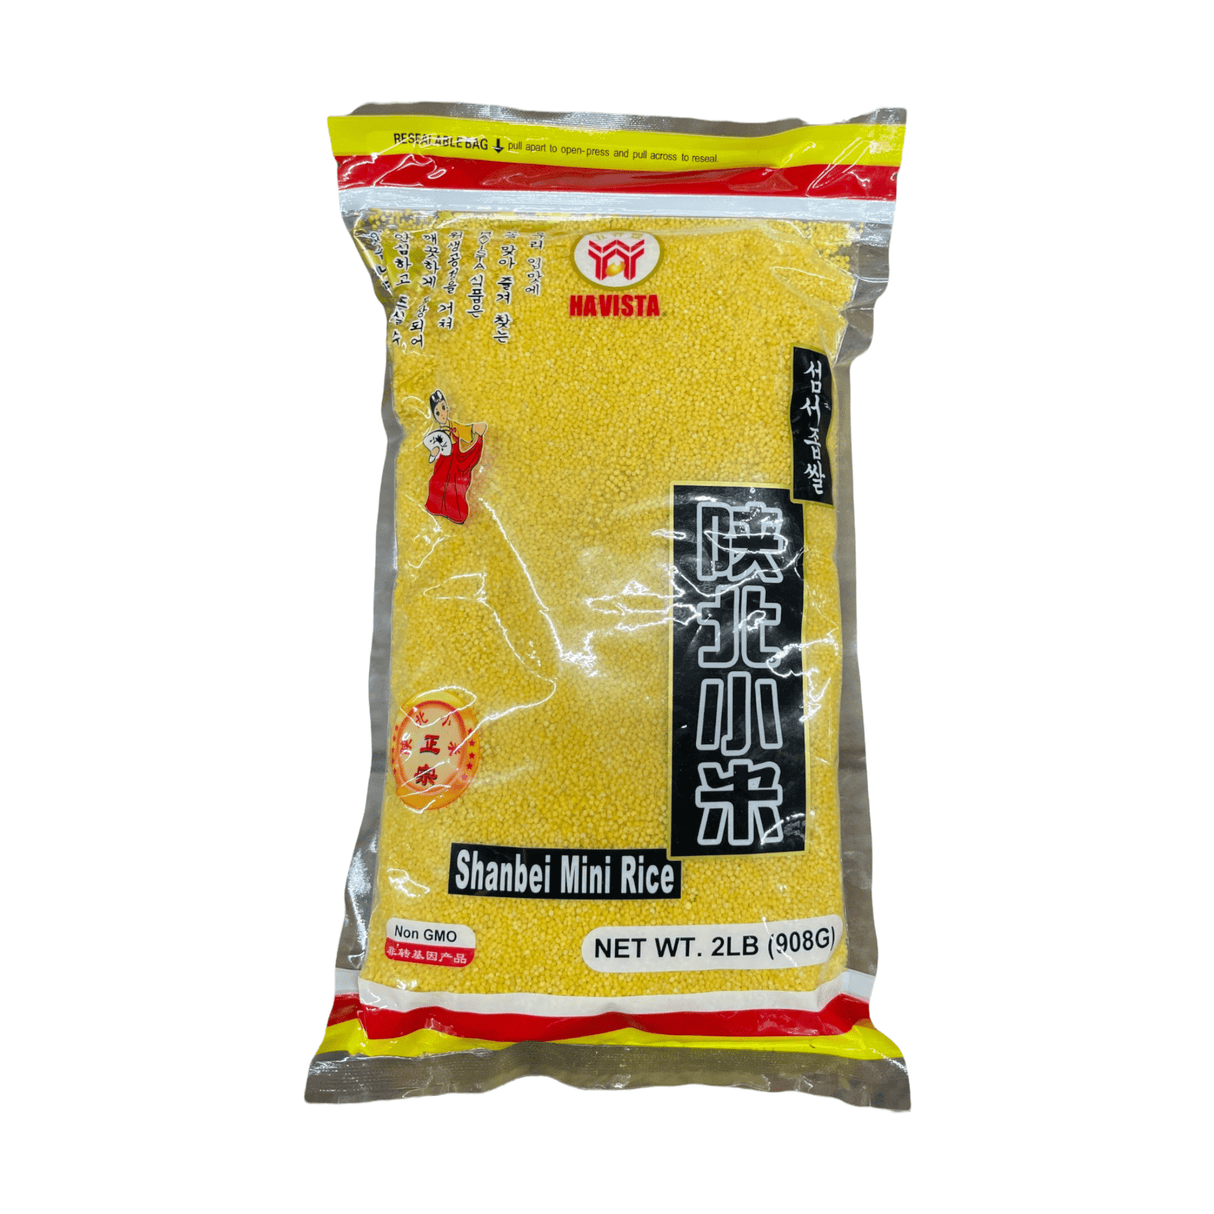 Havista Shanbei Mini Rice